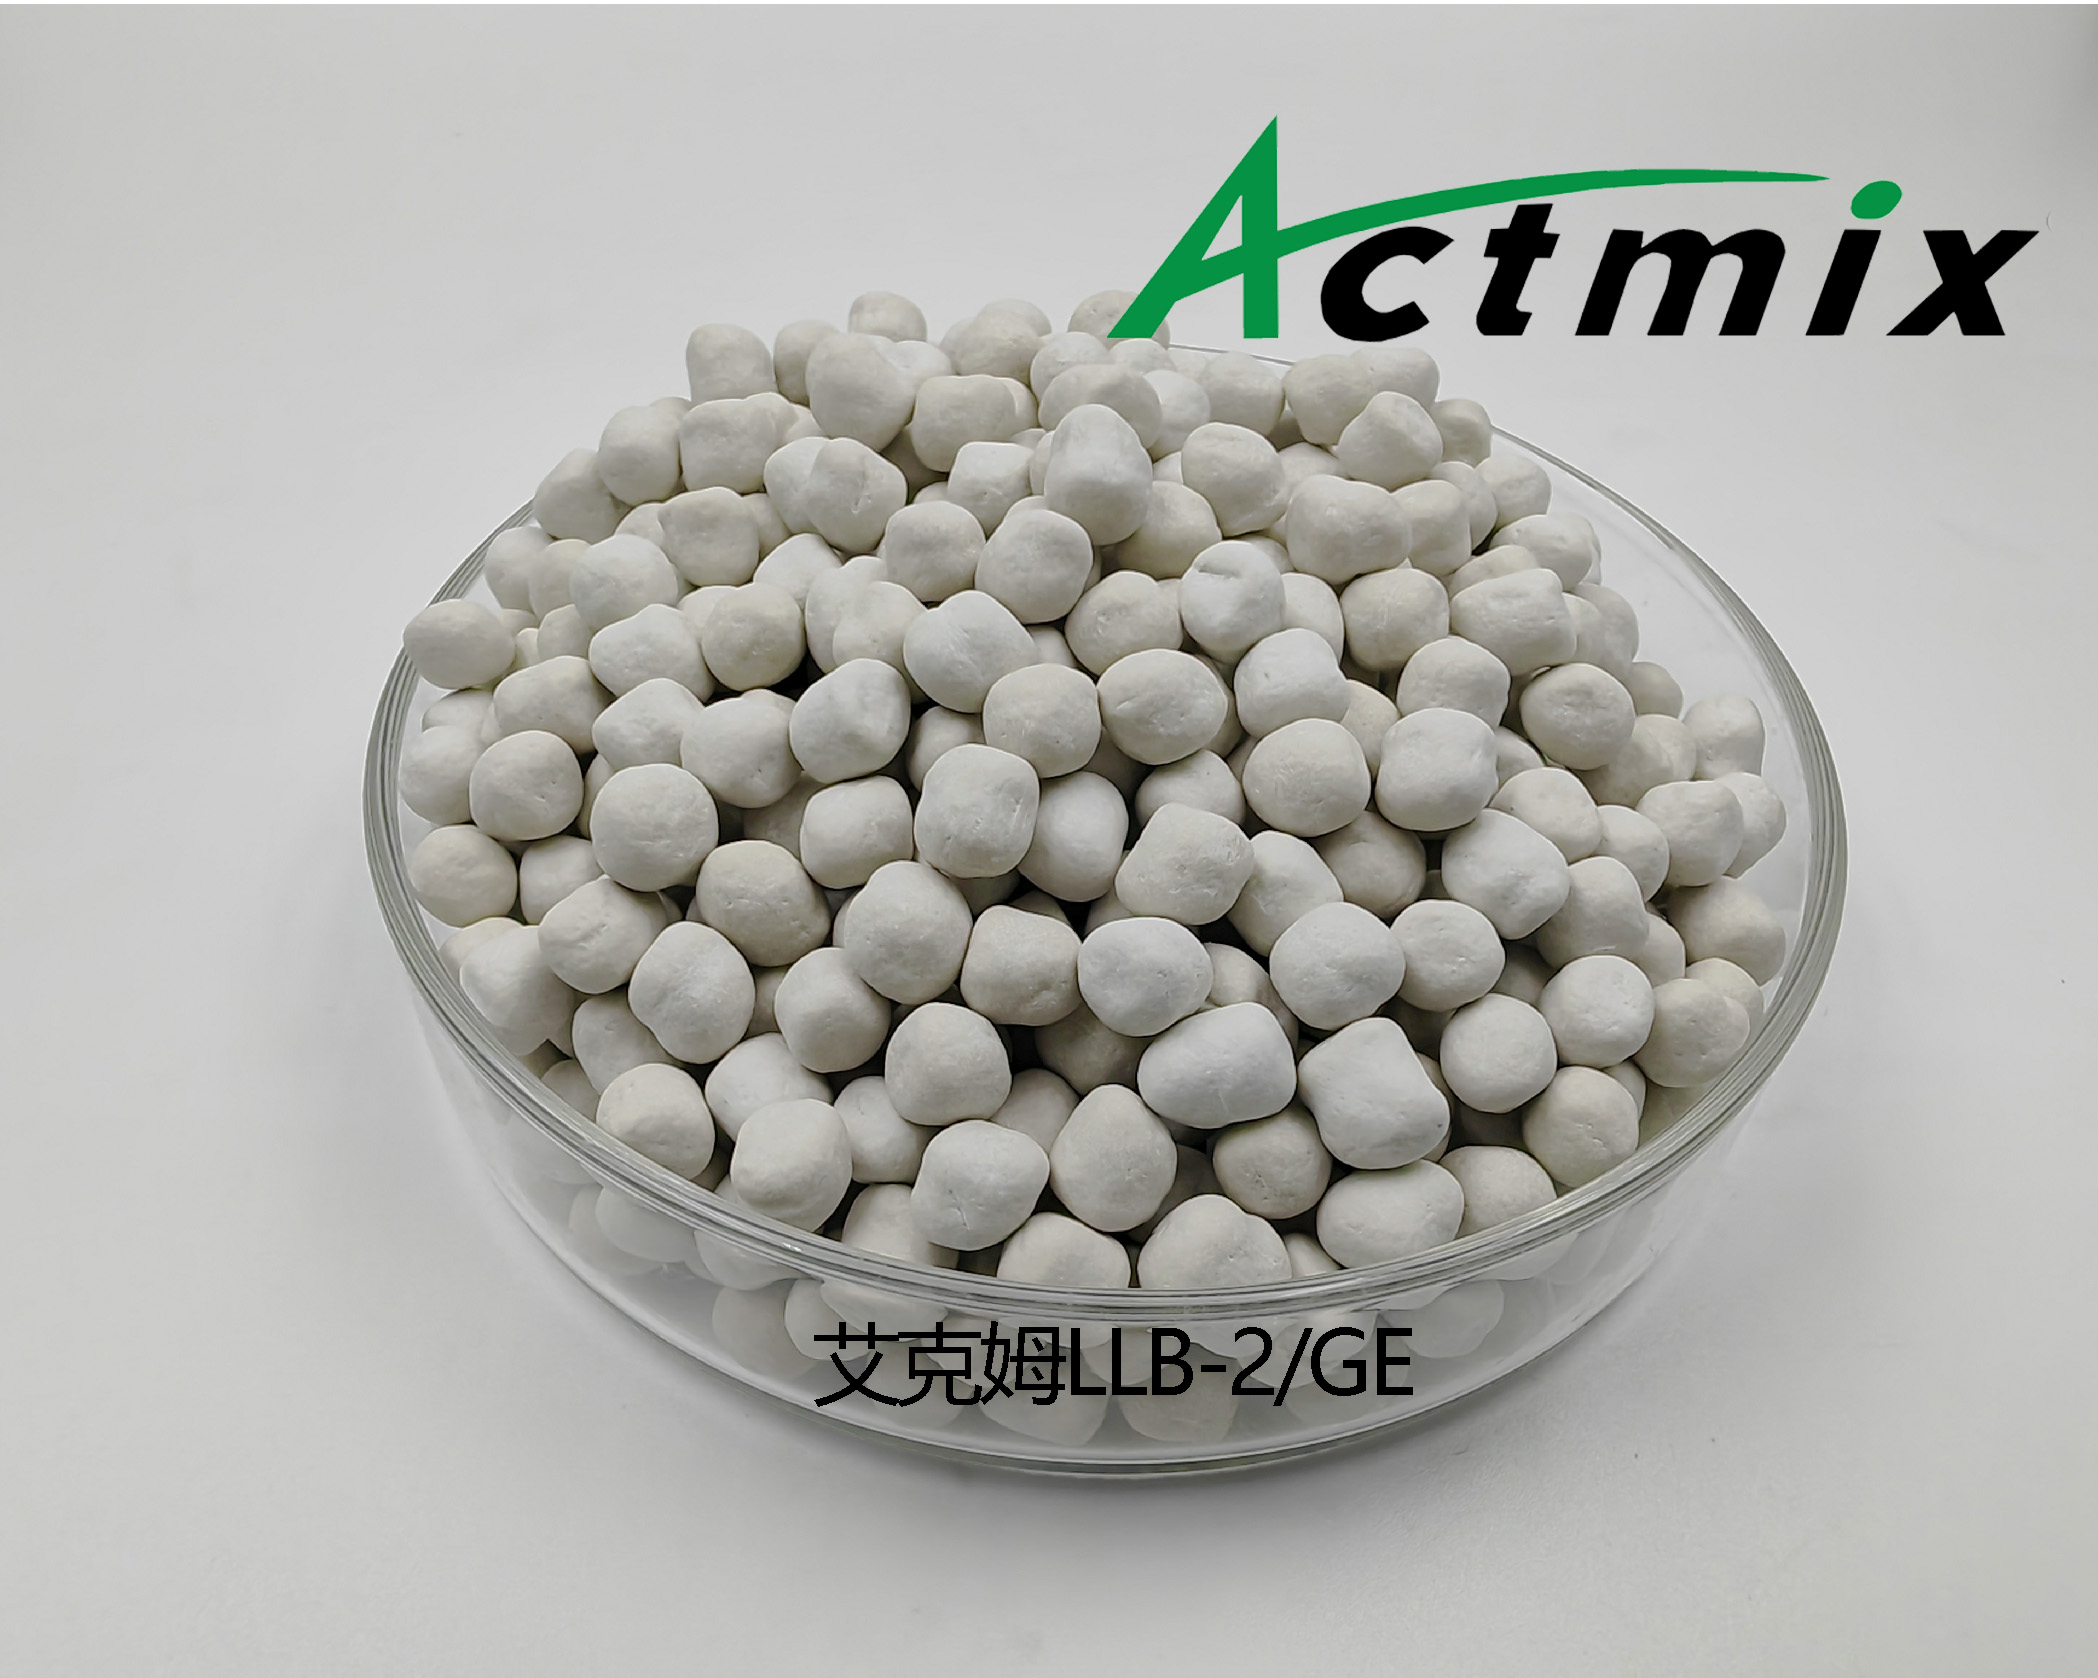 Actmix LLB-2/GE